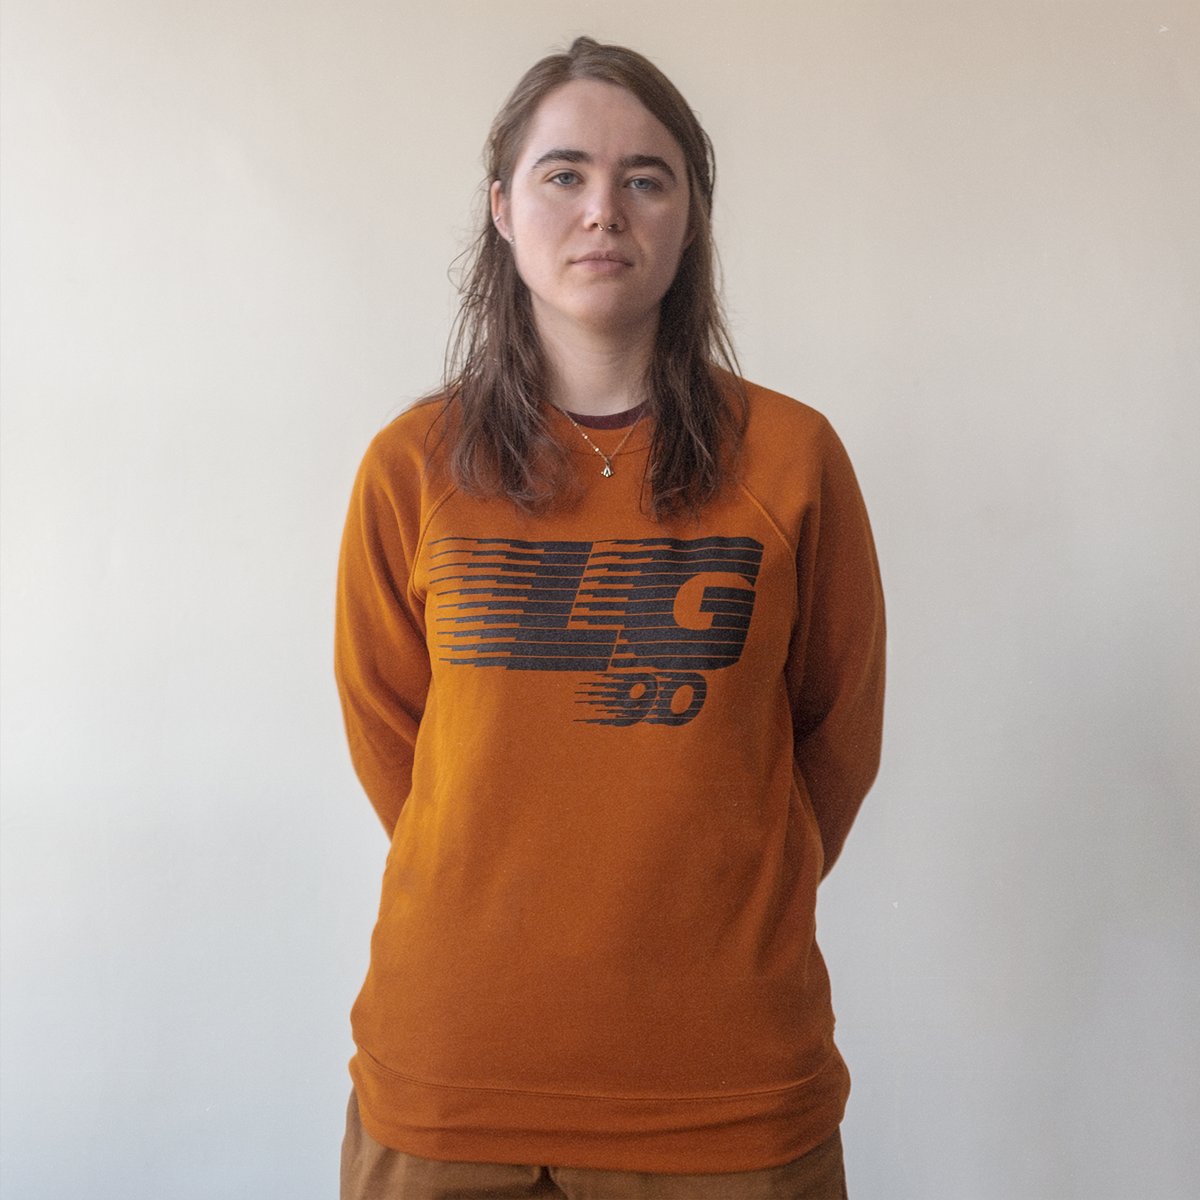 Image of LG Olympic 90 Sweatshirt